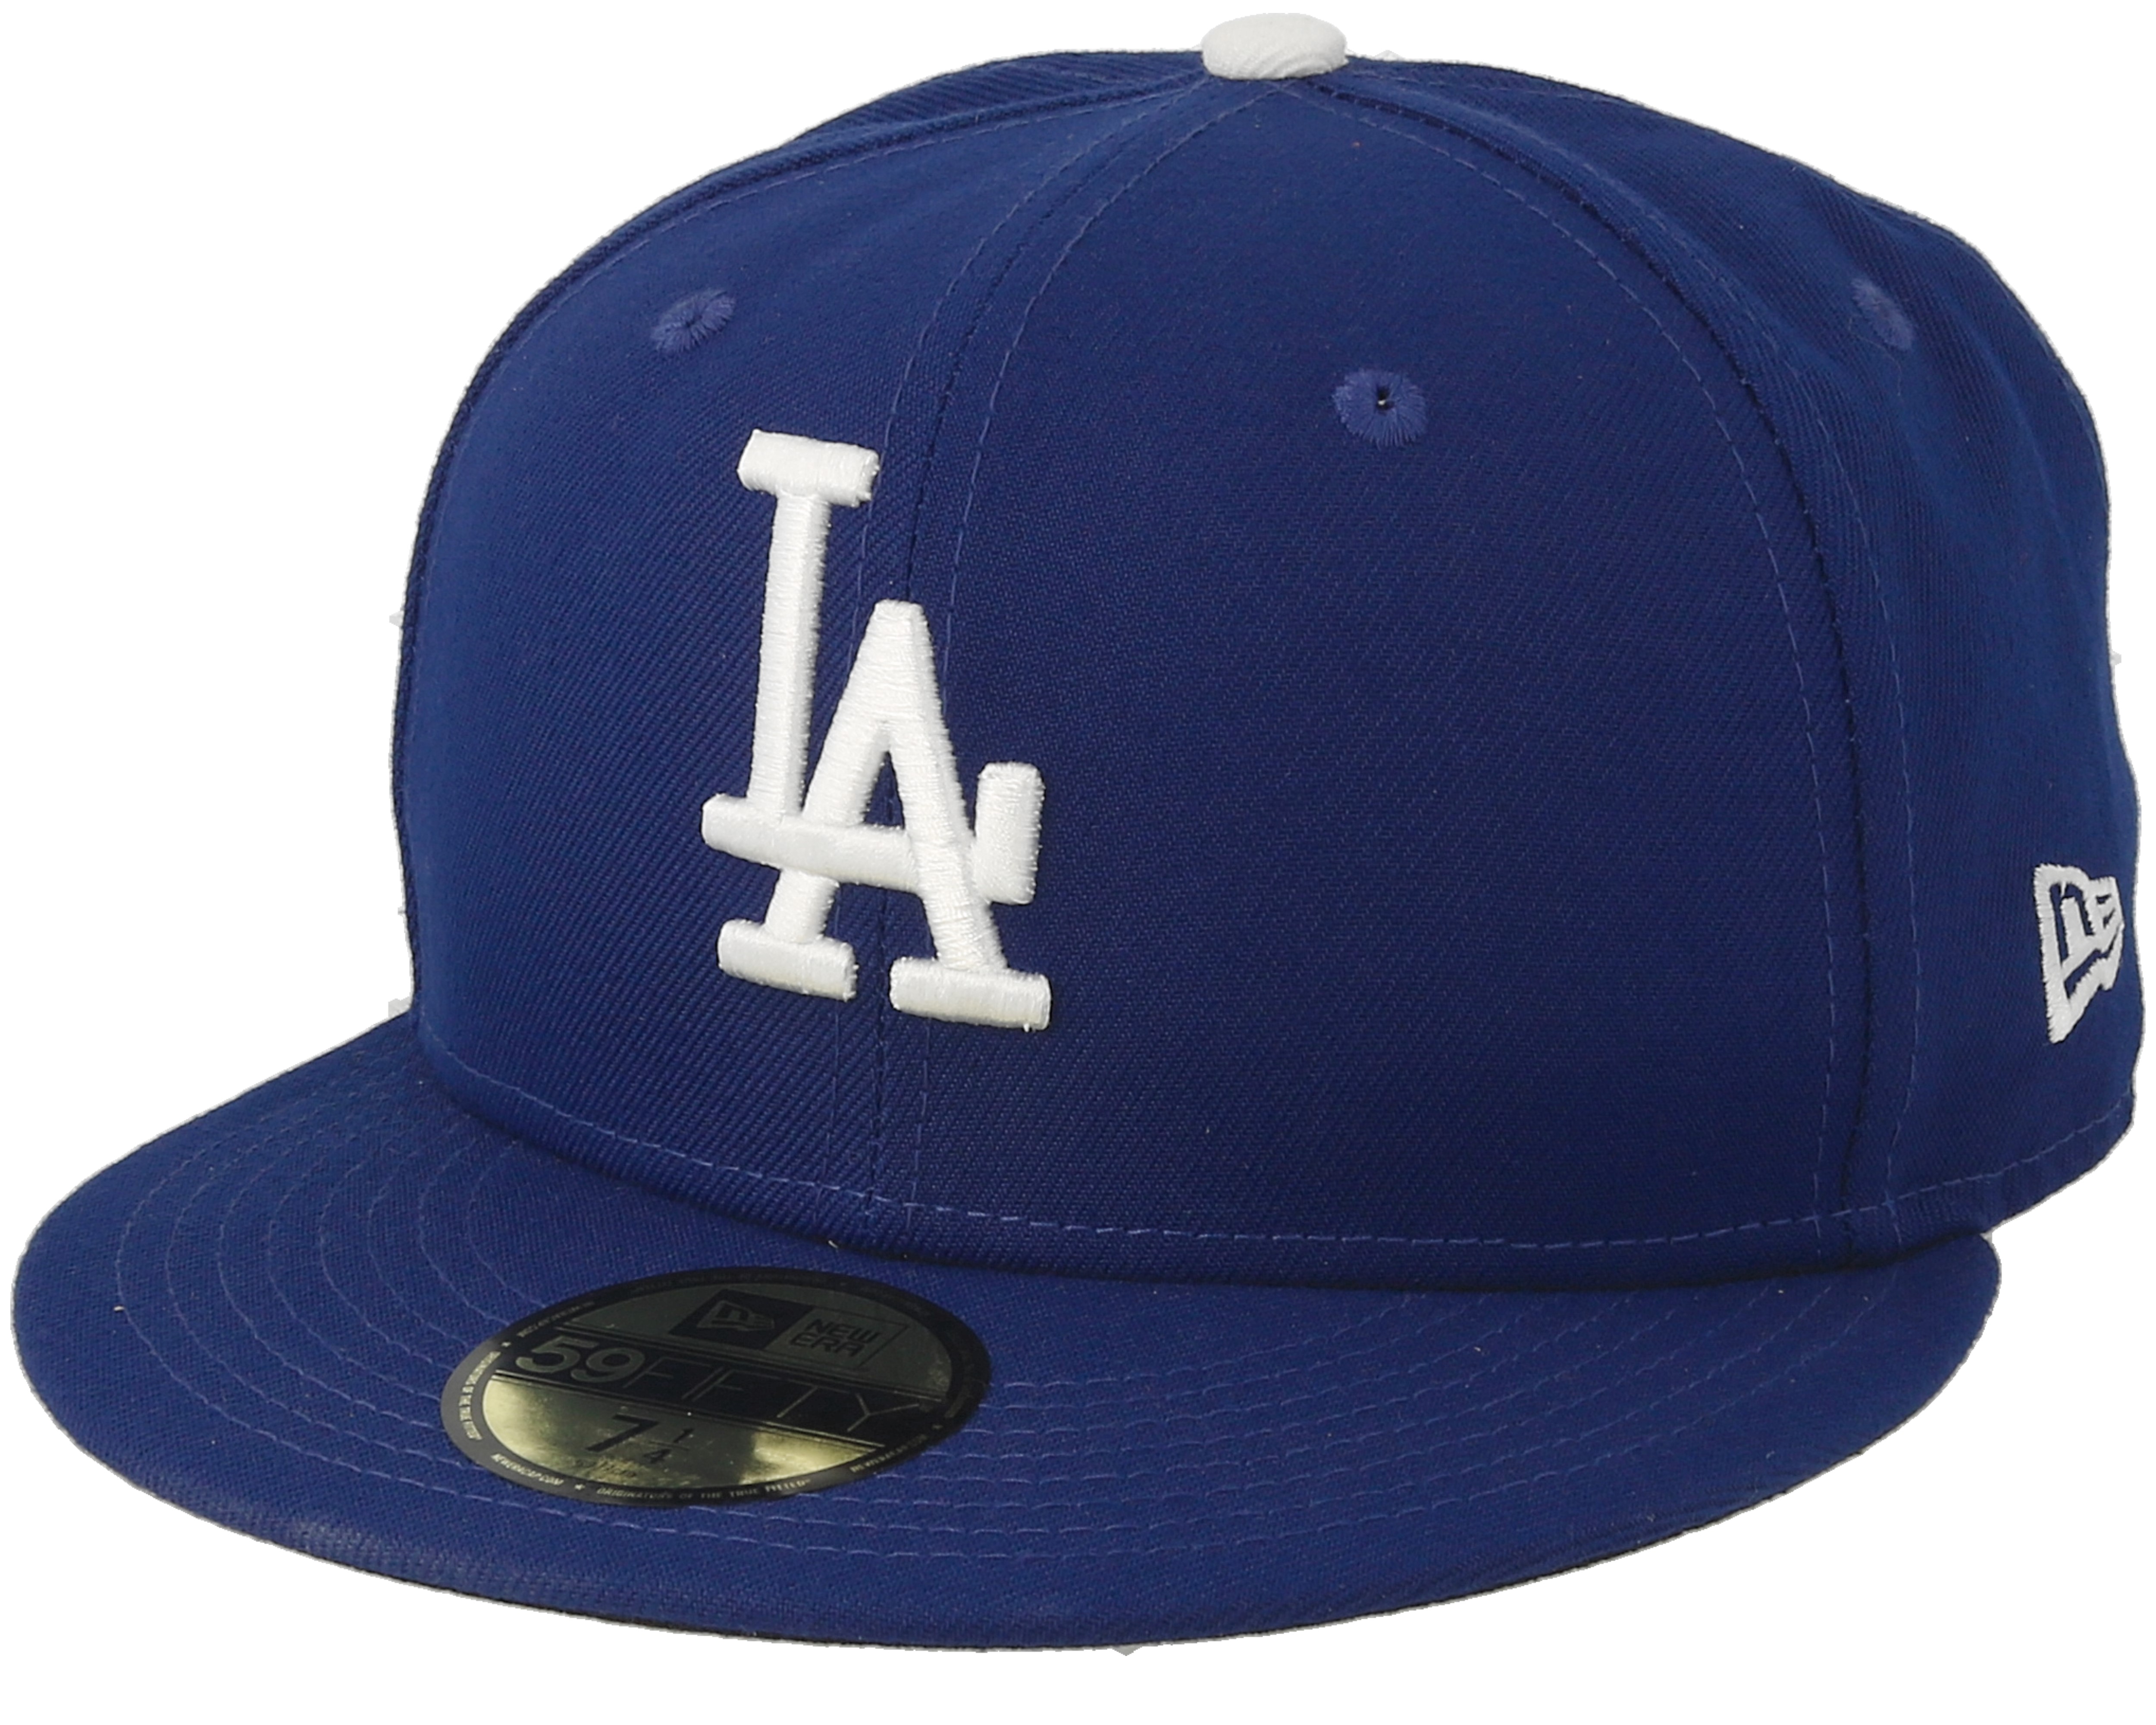 LA Dodgers Authentic On-Field Game 59Fifty - New Era - Start бейсболку